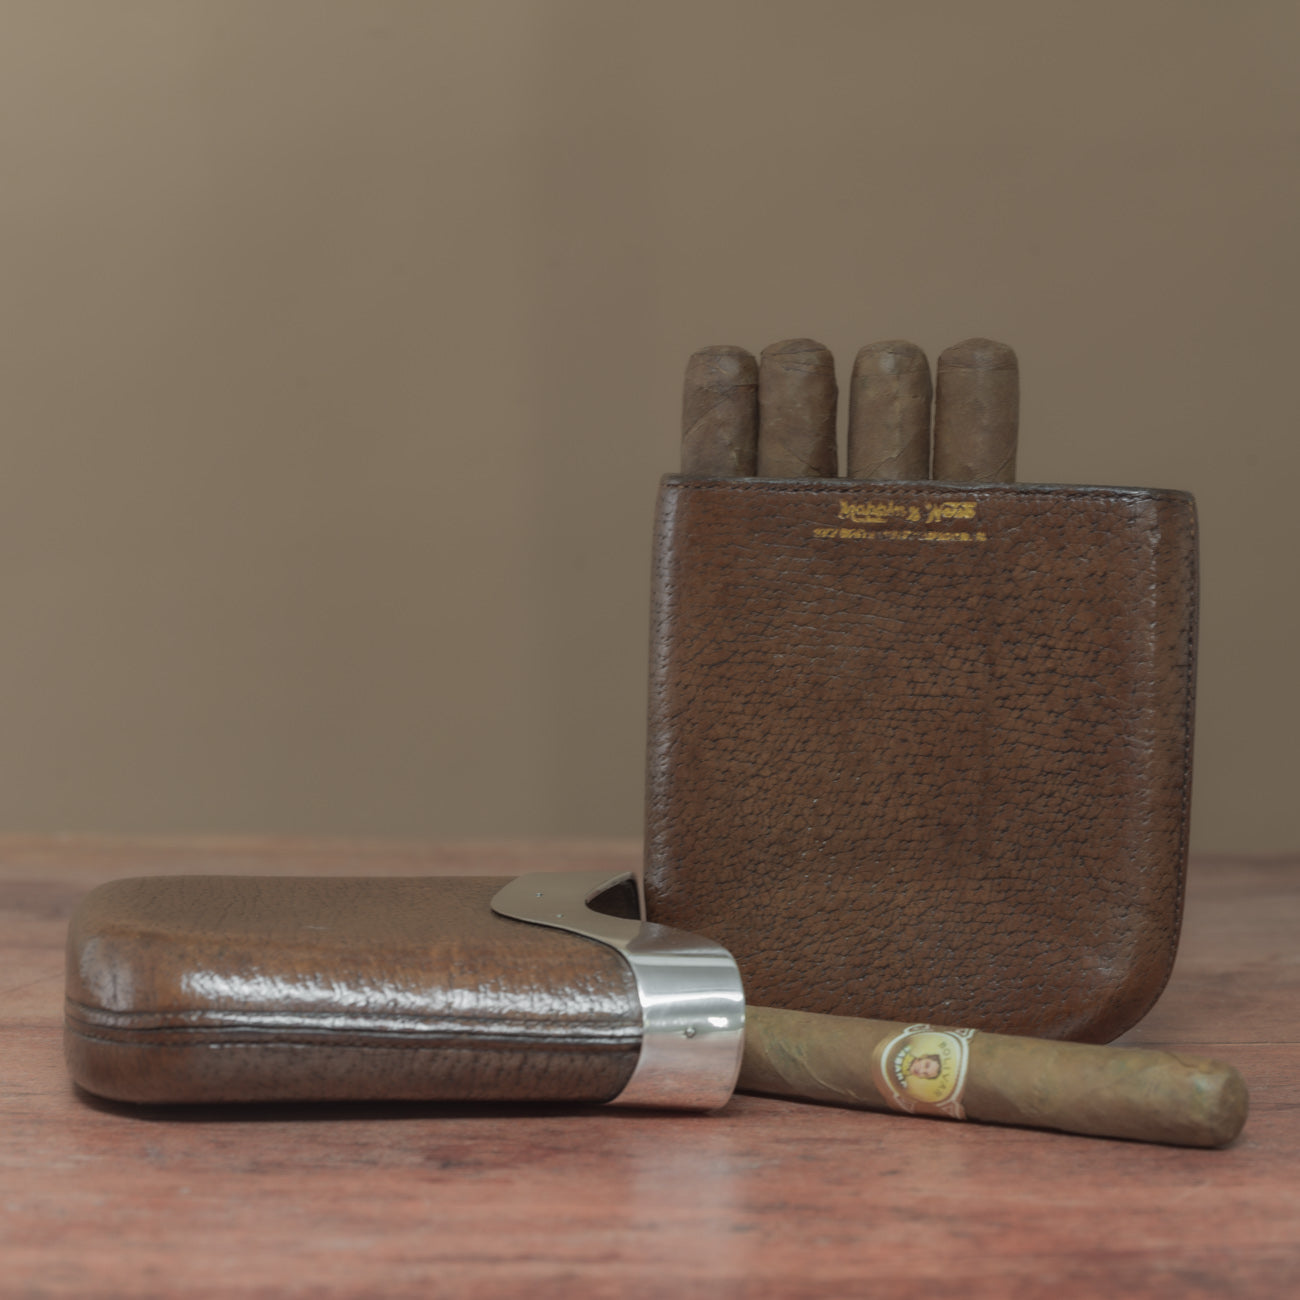 Cain Croco Cigar Travel Case (Brown)